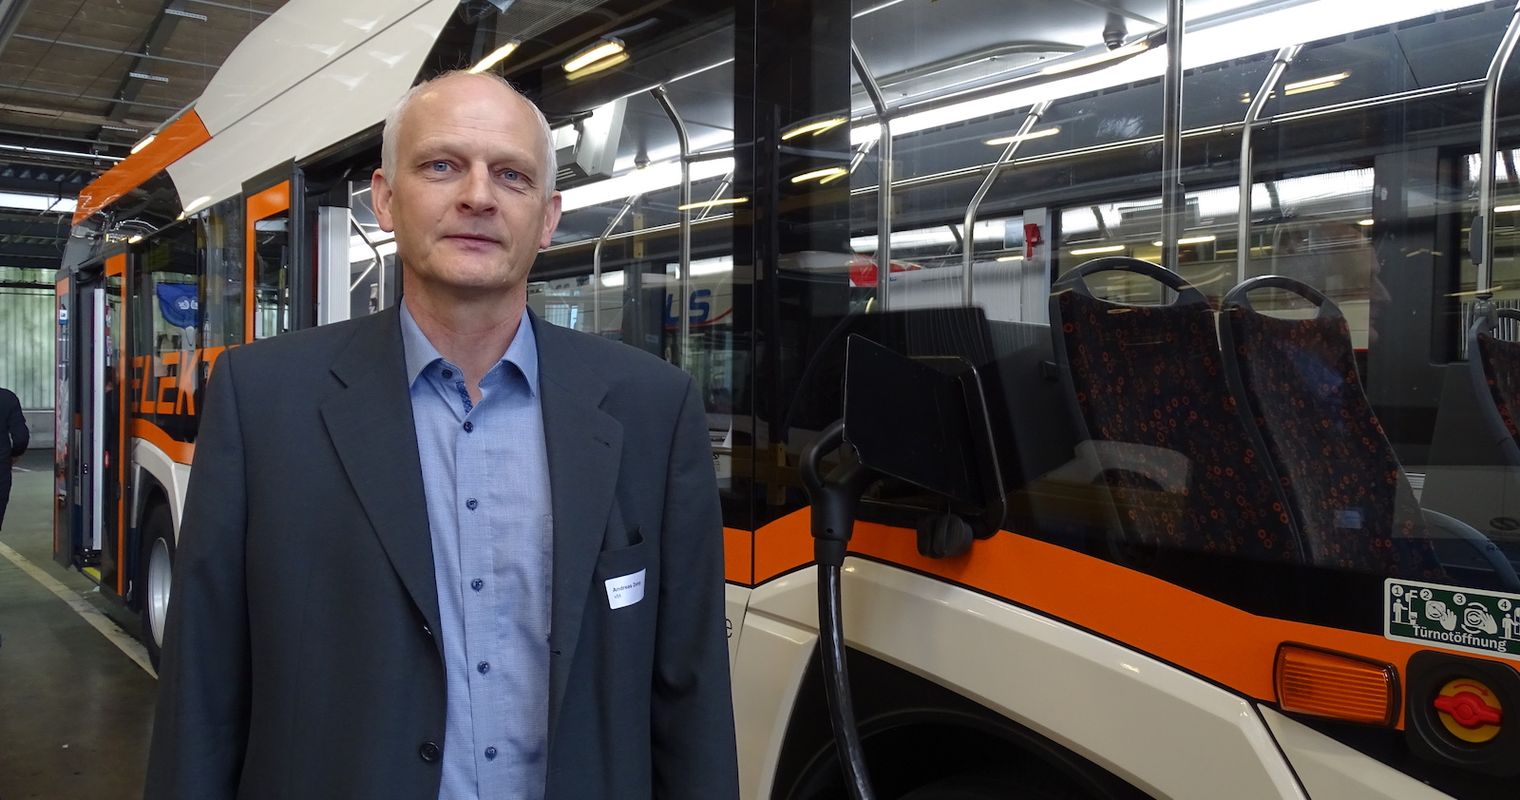 Neue E-Busse der VBL: Holprig, aber sonst gut in Fahrt